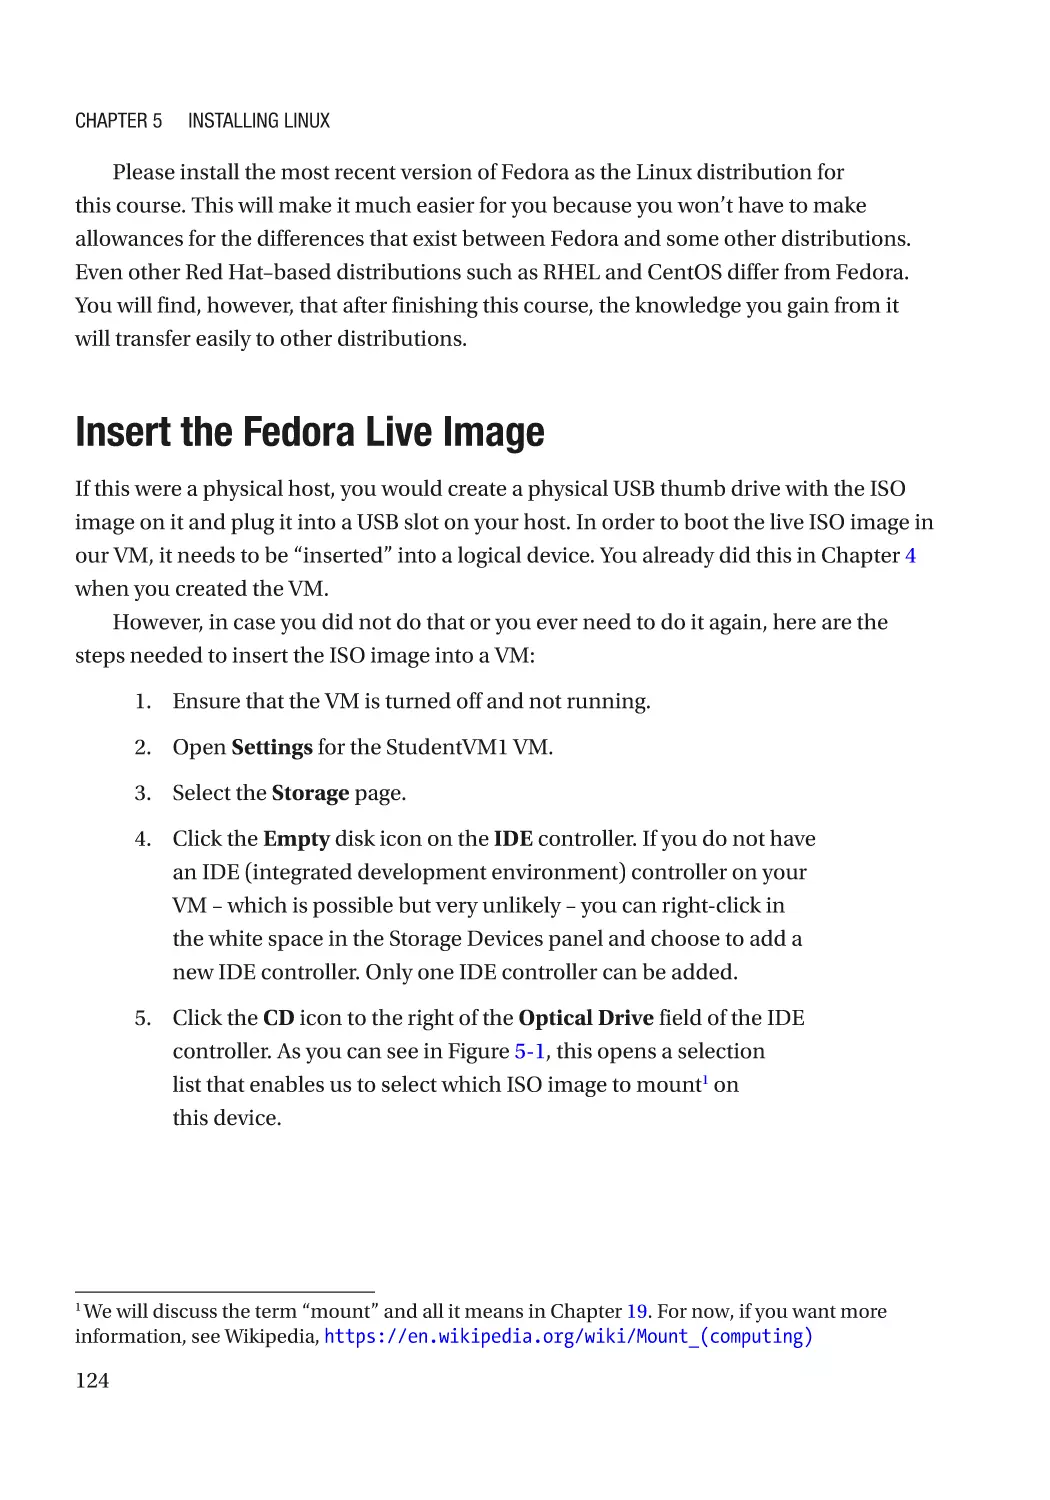 Insert the Fedora Live Image